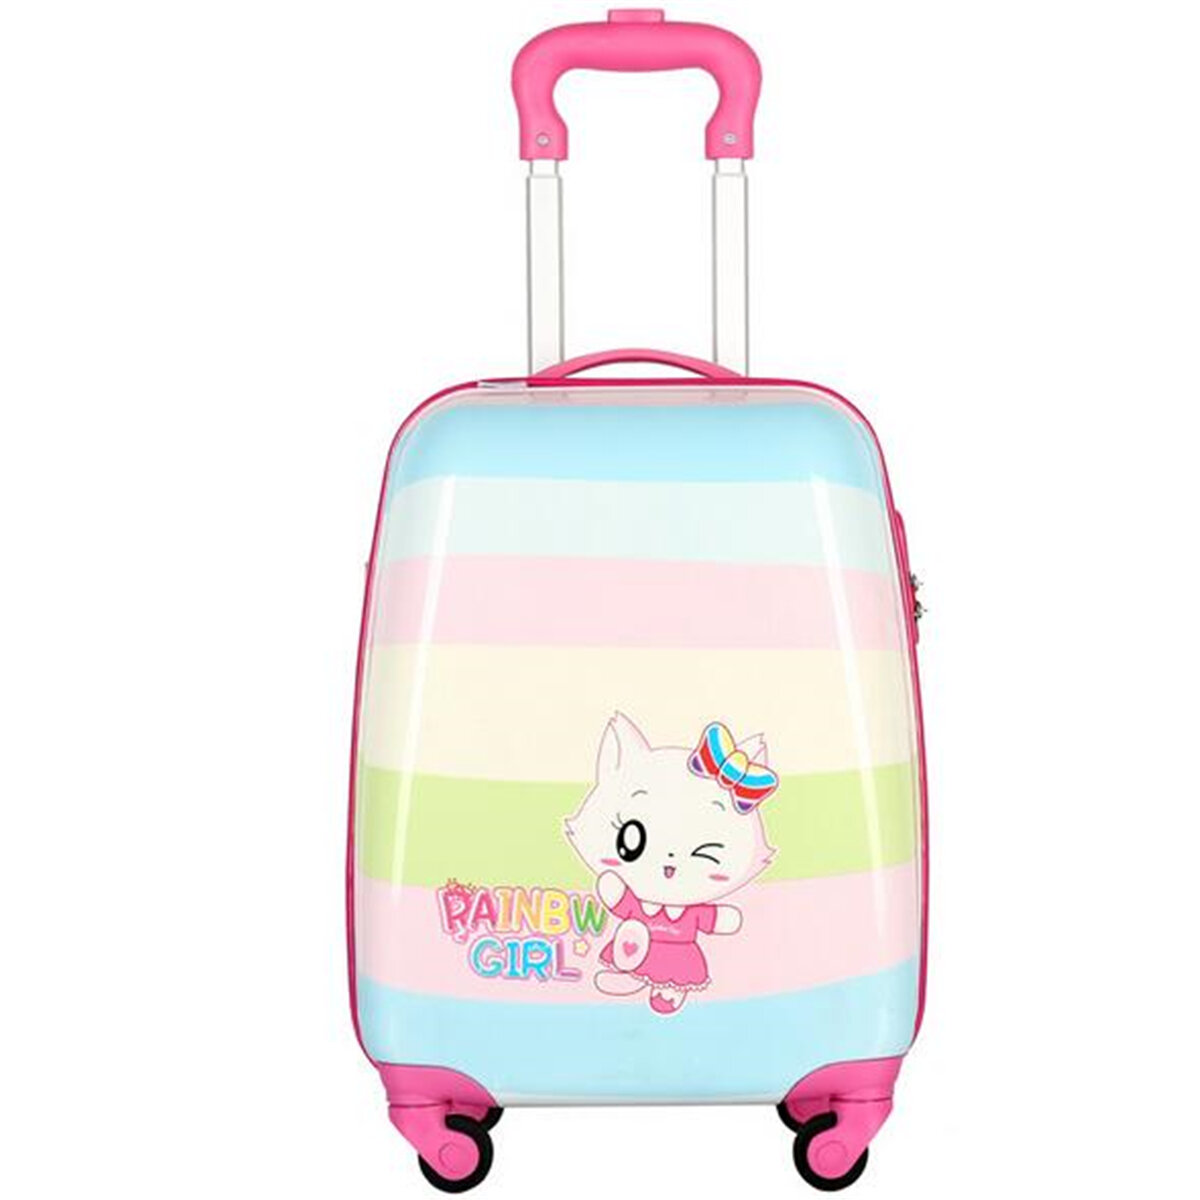 18inch Children Luggage Cartoon Travel Suitcase Camping Aluminium Trolley Bag Rolling Luggage